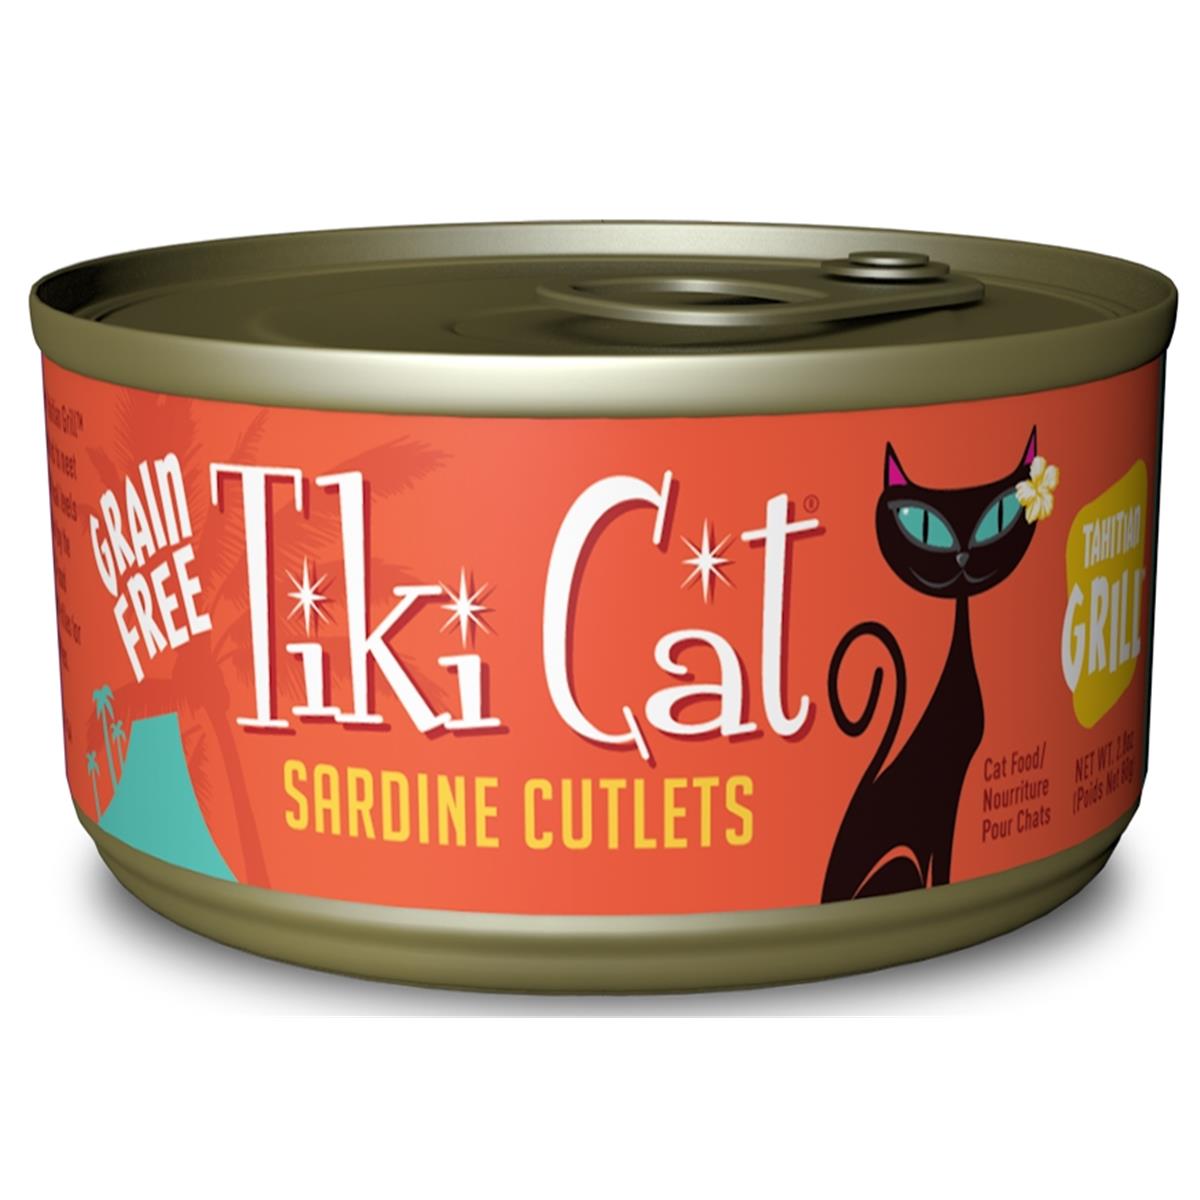 Tk10750 Tahitian Grill Grain Free Sardine Cutlets Canned Cat Food - 6 Oz - Case Of 8